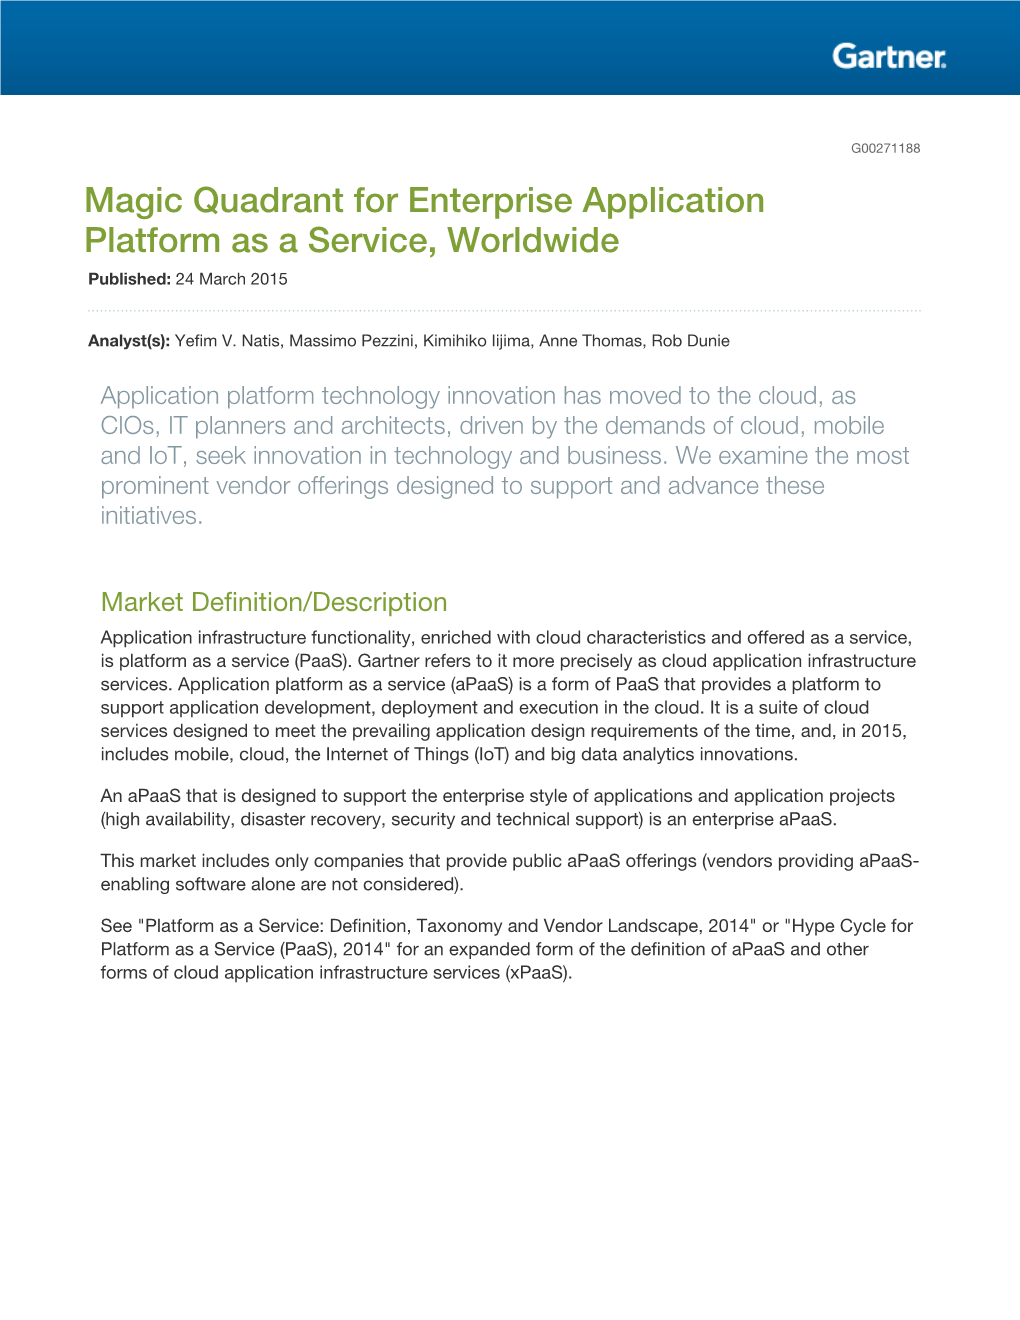 Magic Quadrant for Enterprise Application Platform As a Service, Worldwide Published: 24 March 2015